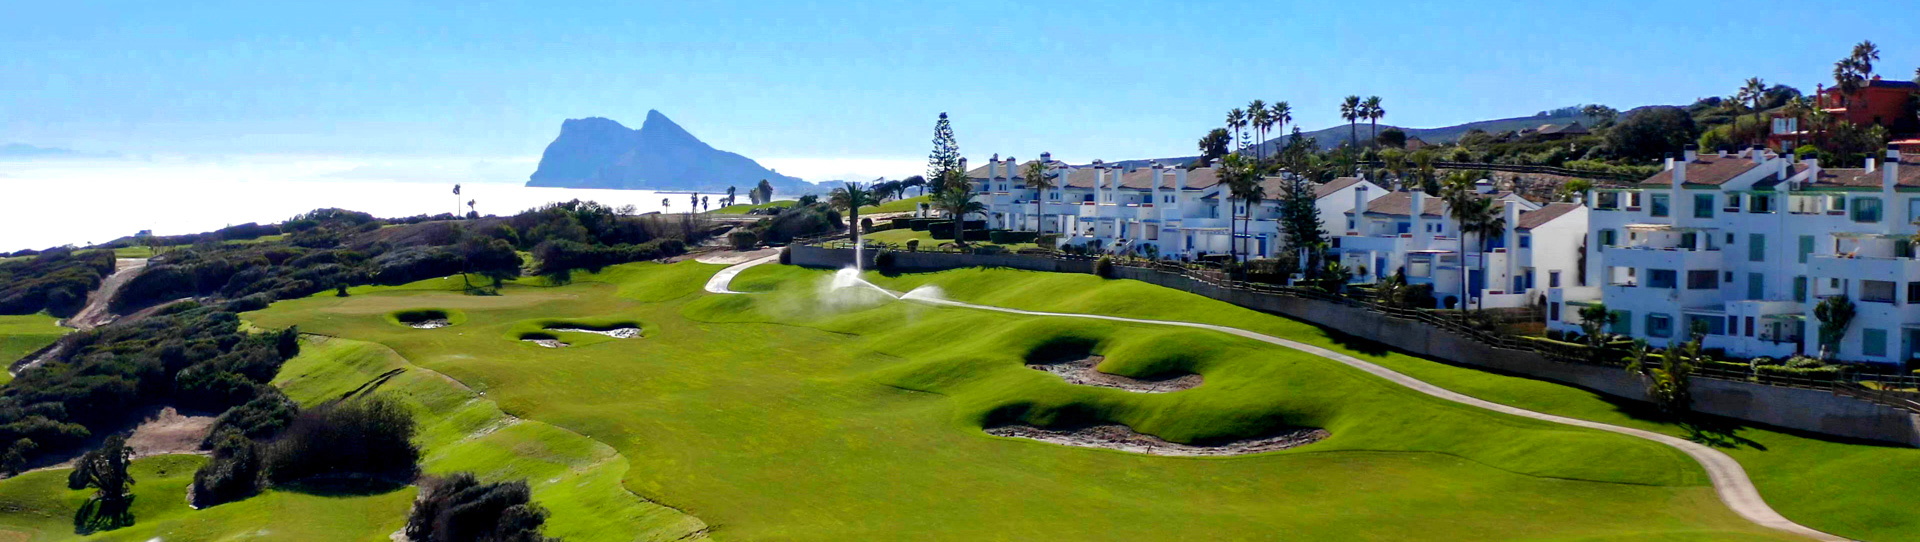 Spain golf courses - La Hacienda Alcaidesa Links Golf - Photo 3